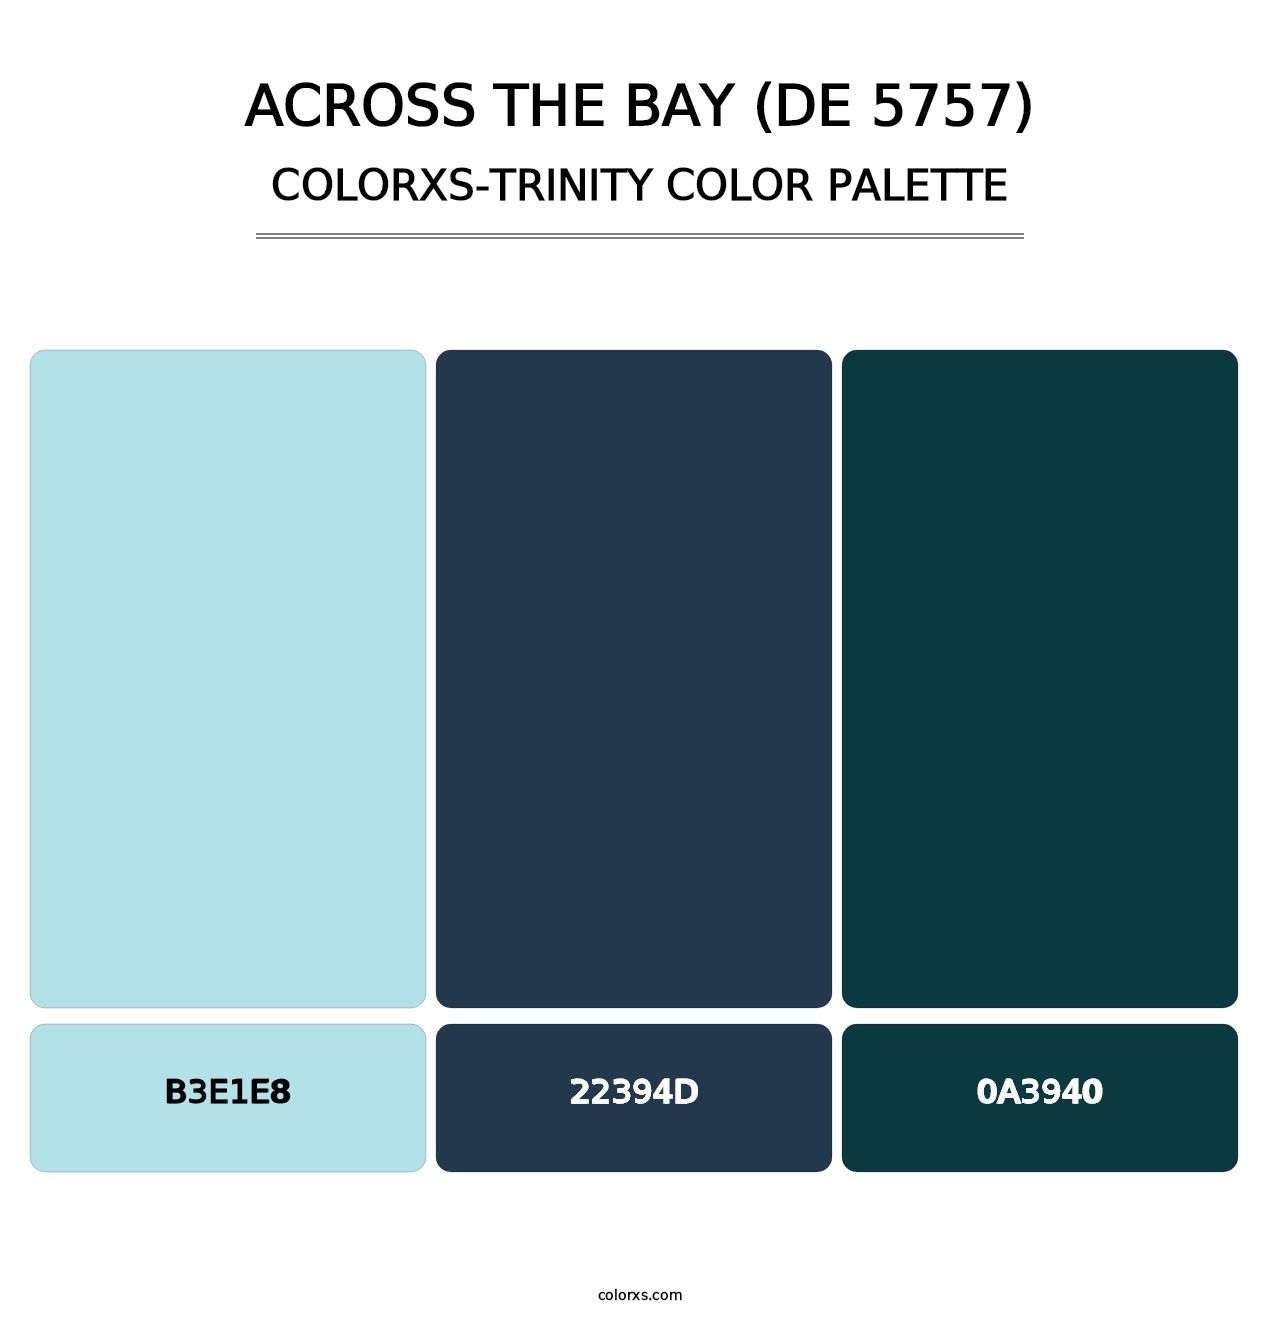 Across the Bay (DE 5757) - Colorxs Trinity Palette